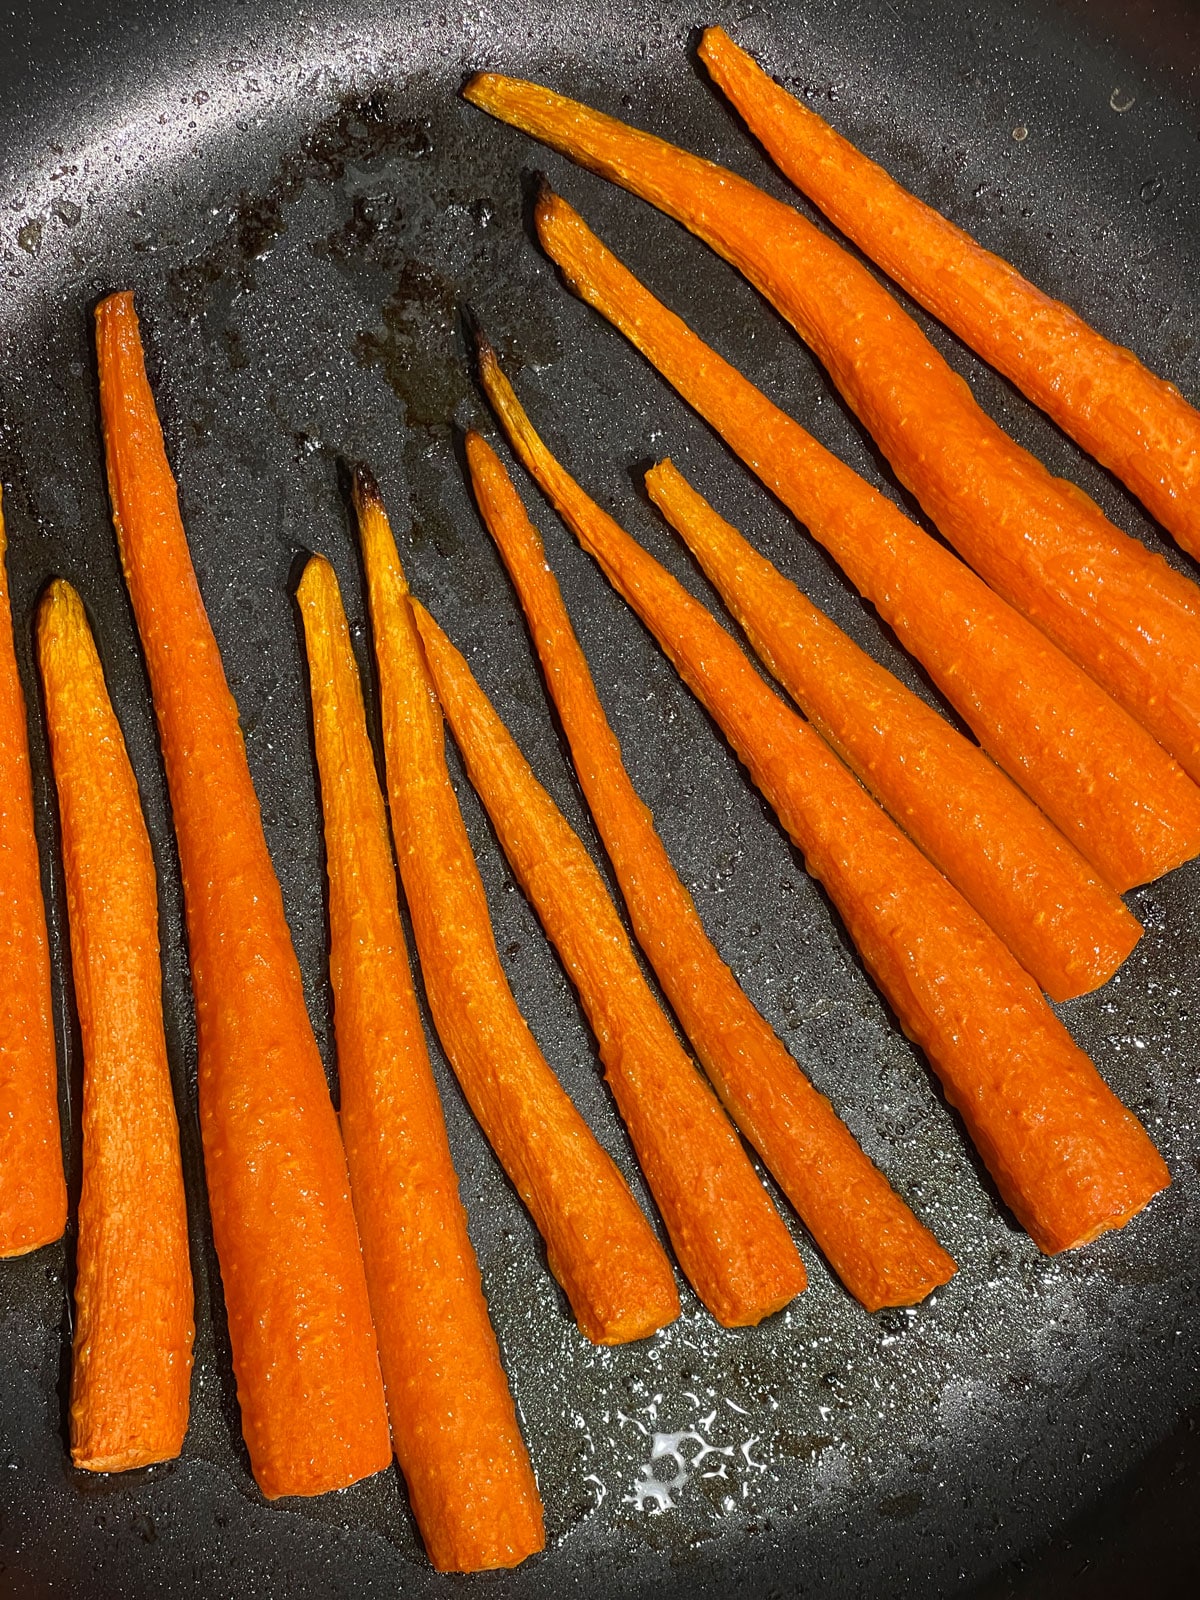 roasted whole carrots